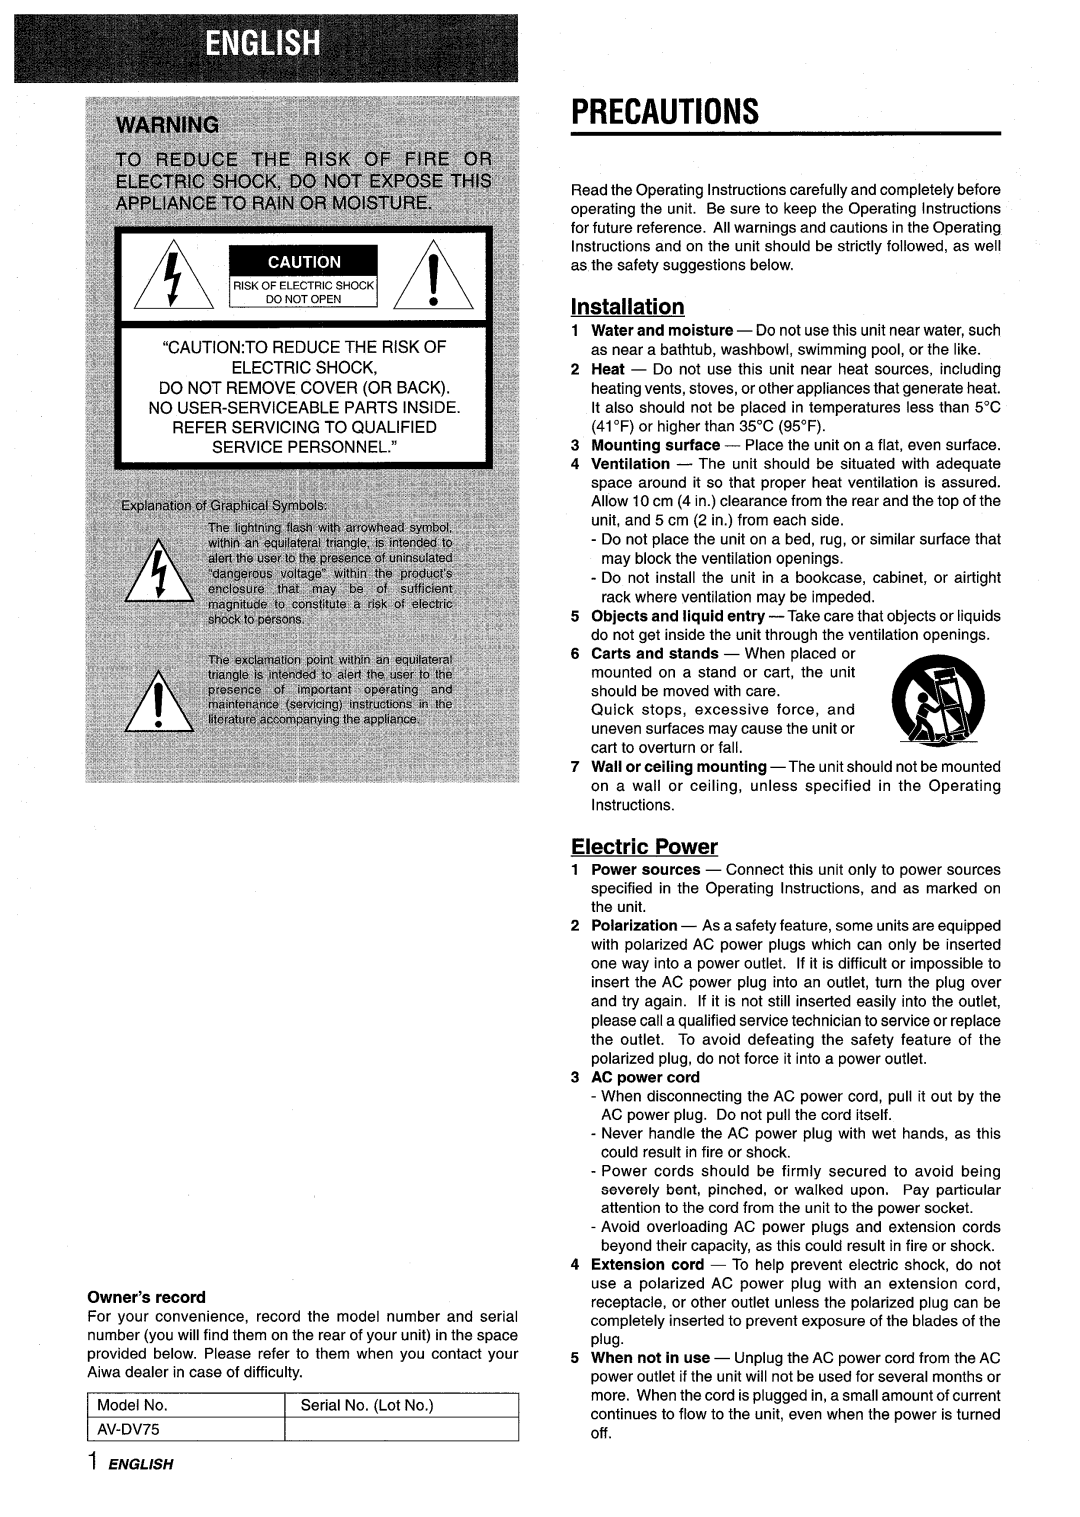 Sony AV-DV75 manual Installation, Electric Power, “Cautionto Reduce The Risk Of Electric Shock, English, Ia=Ai 